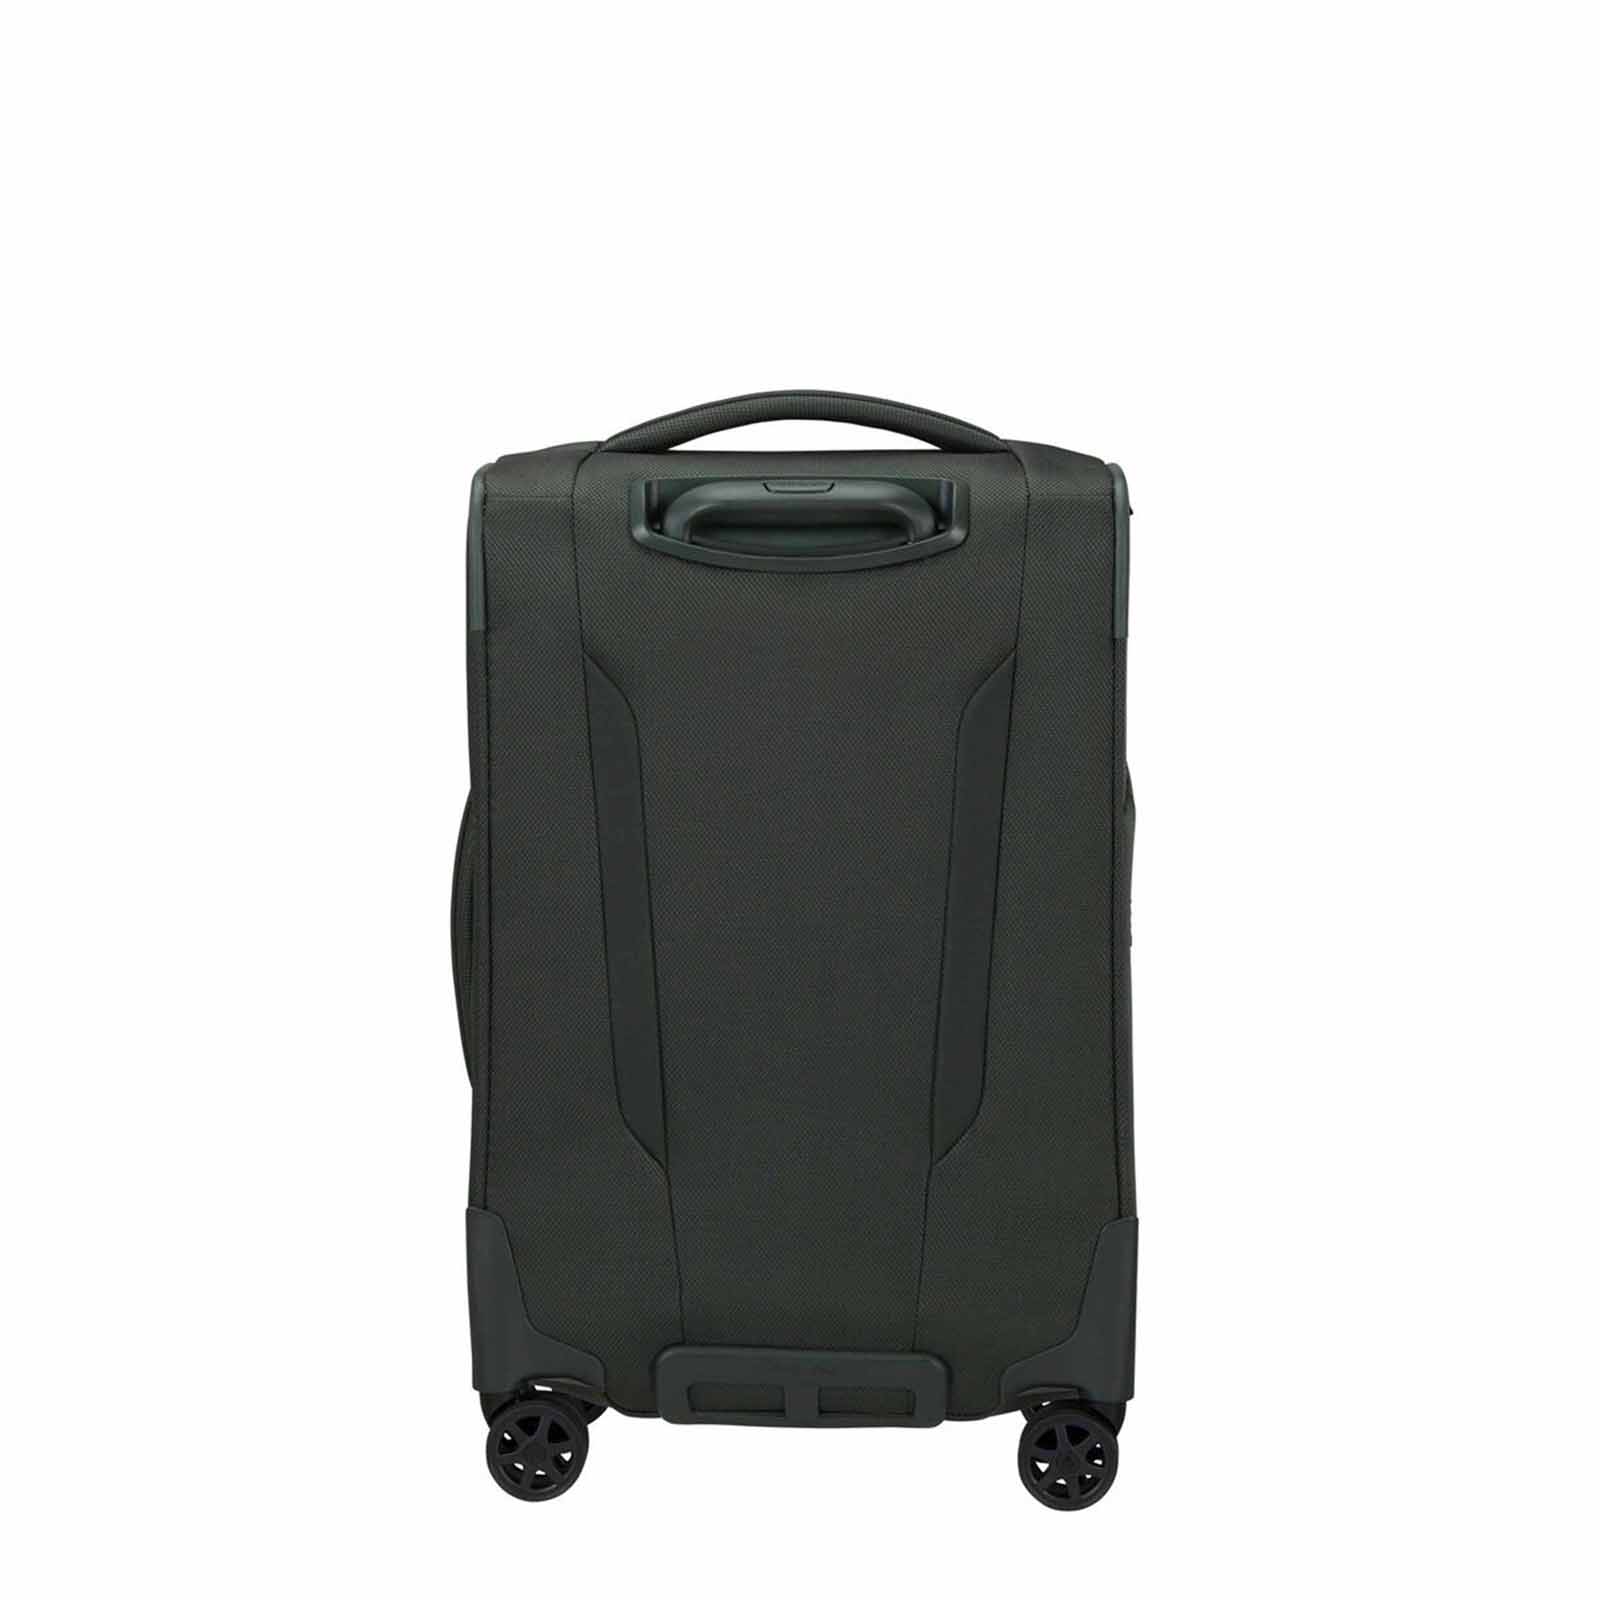 Samsonite-Respark-55cm-Carry-On-Suitcase-Forest-Green-Back